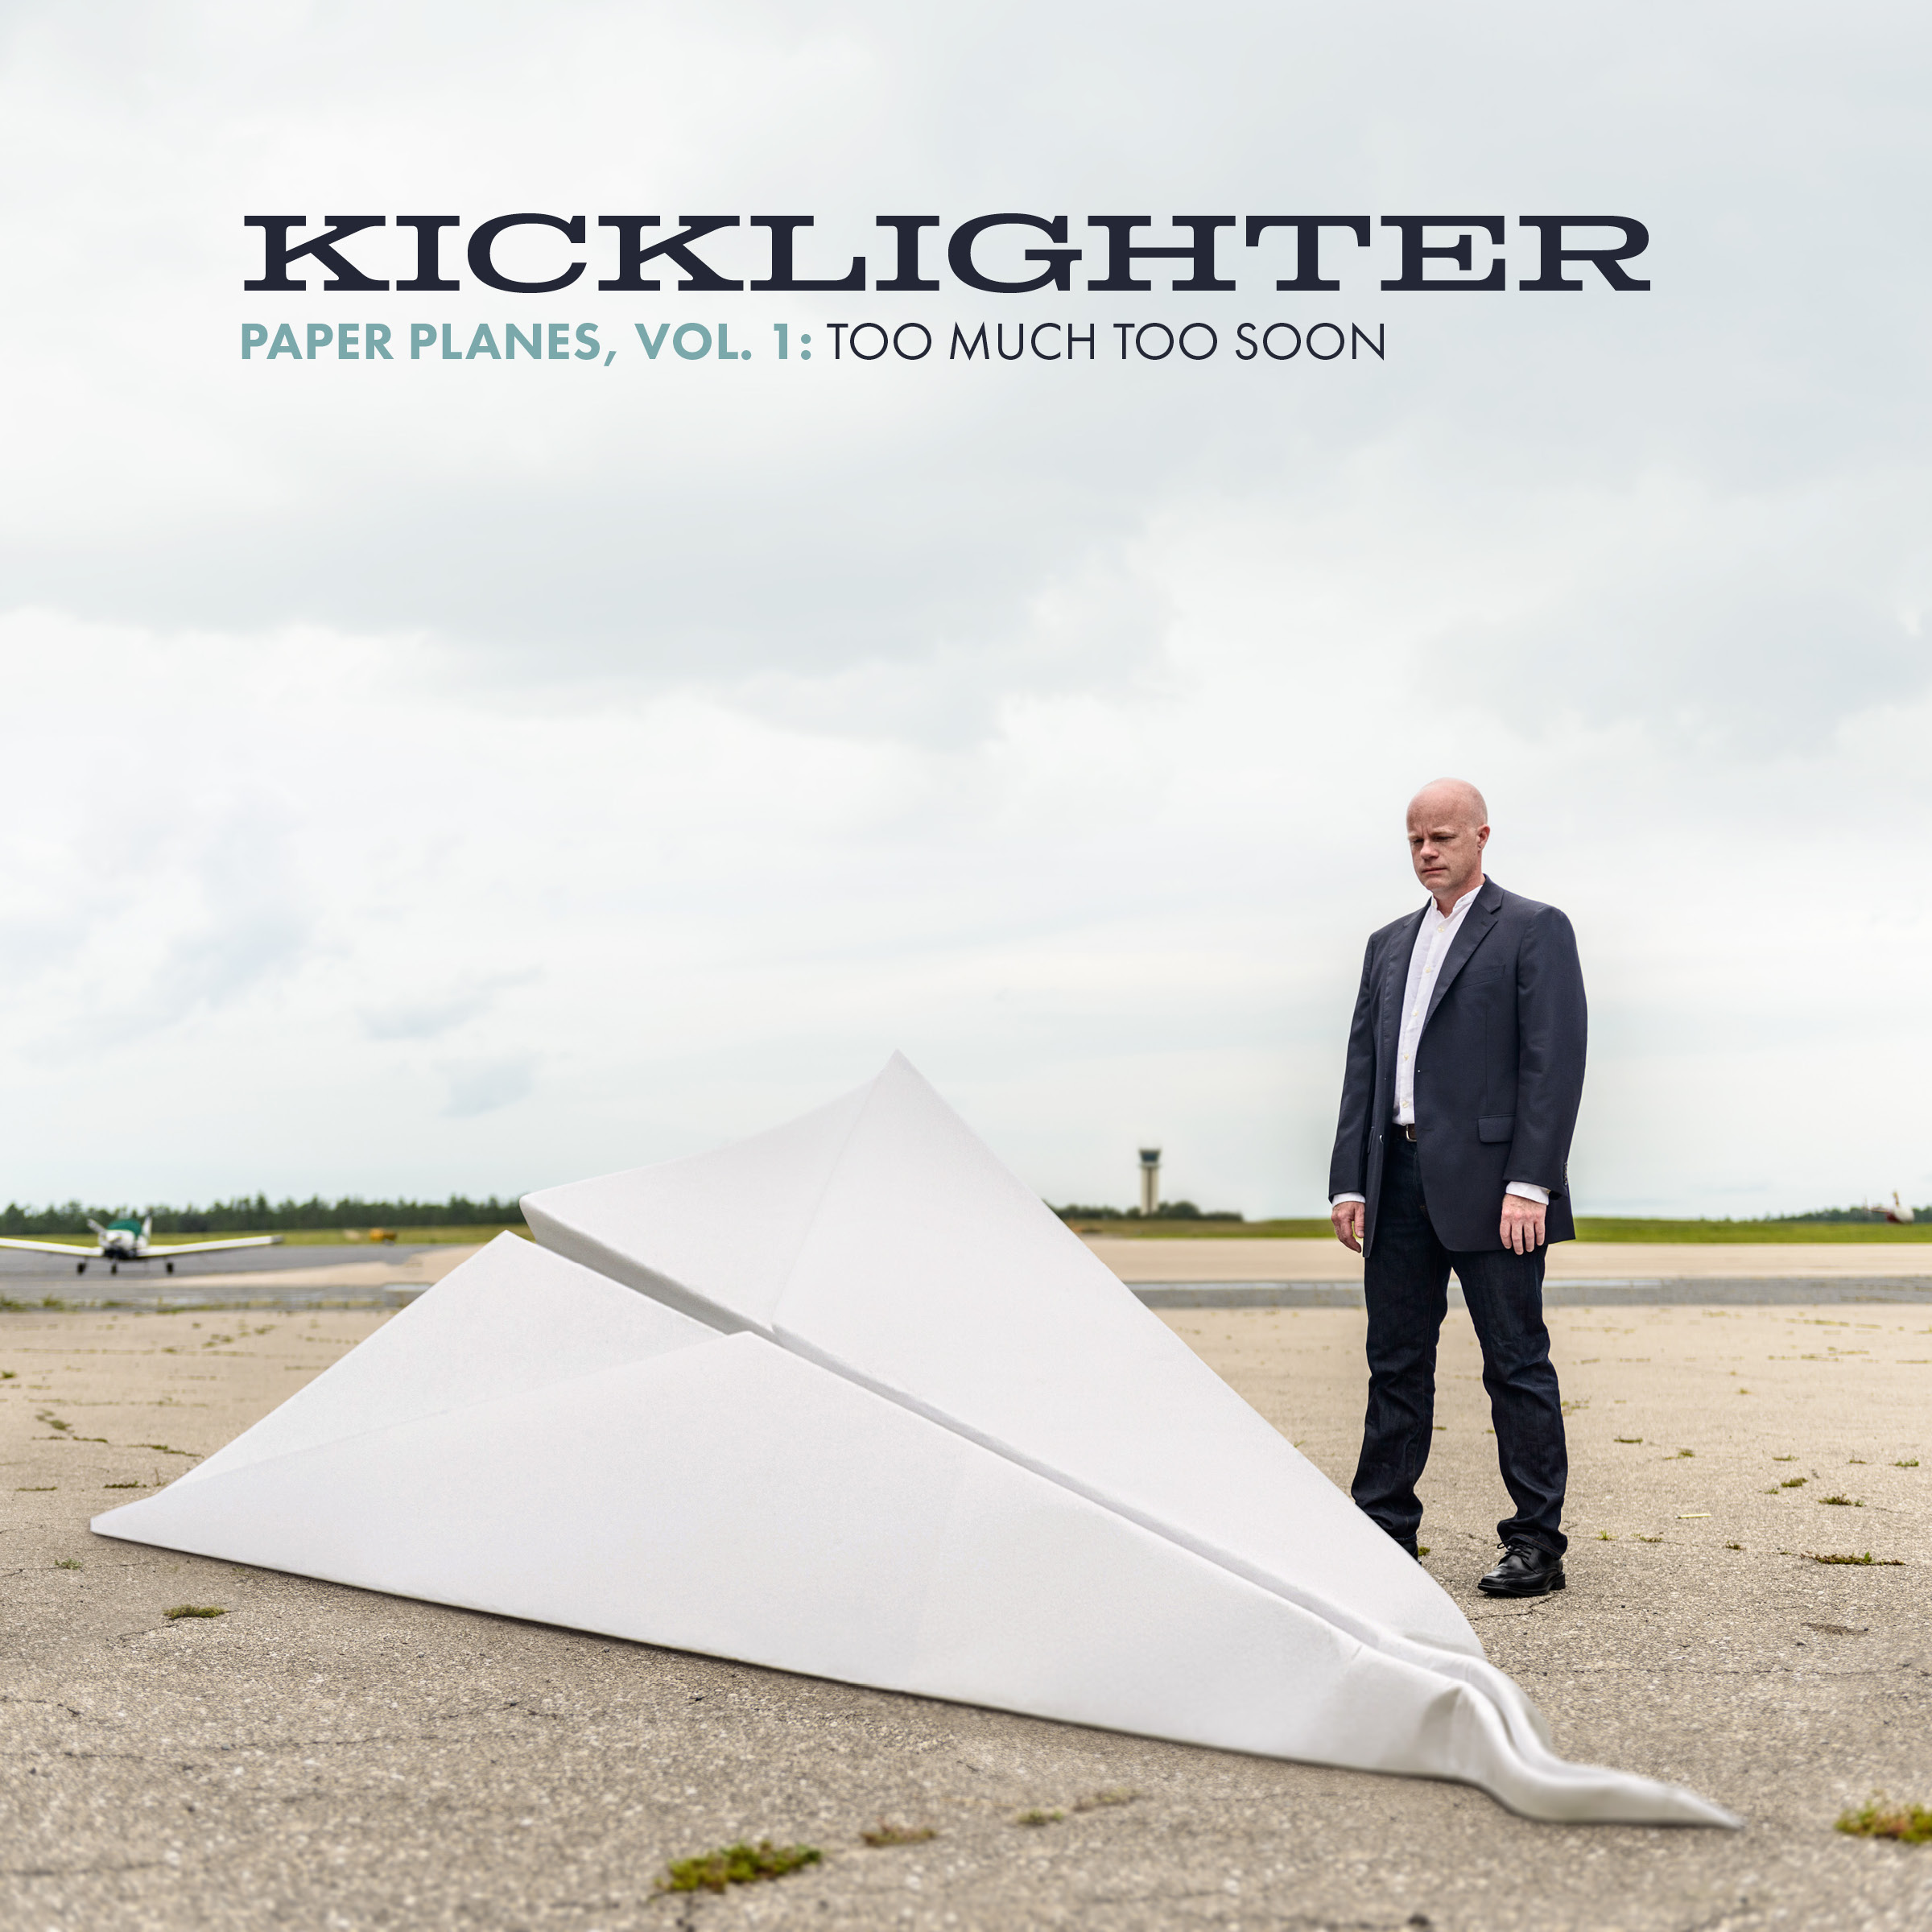 "Paper Planes Vol. 1" by Kicklighter